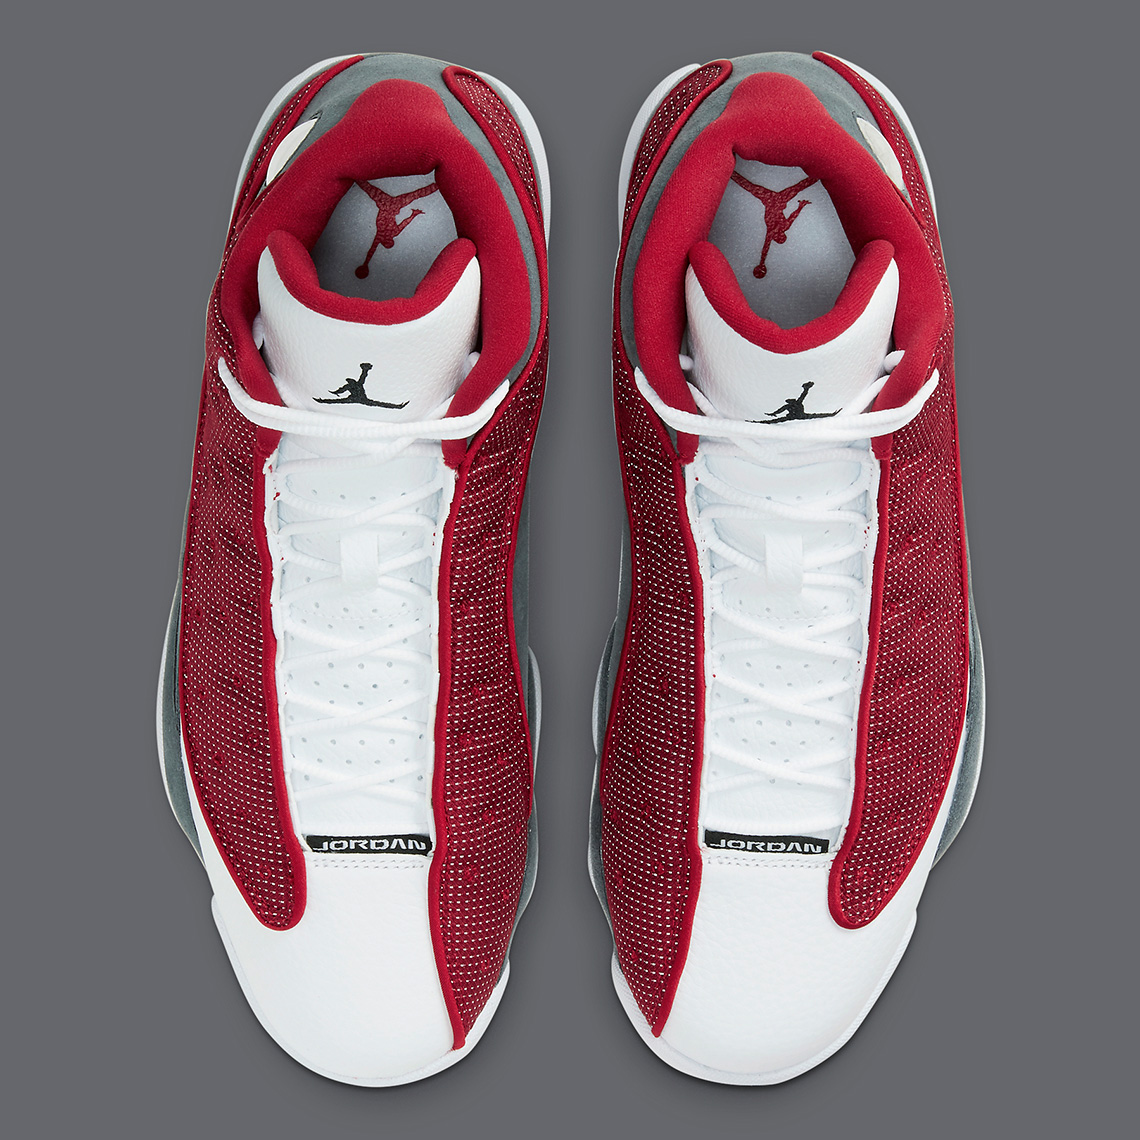 Nike Air Jordan 1 Retro Low Og Unc White Blue Sneakers Men S Red Flint 2021 Release Date 3